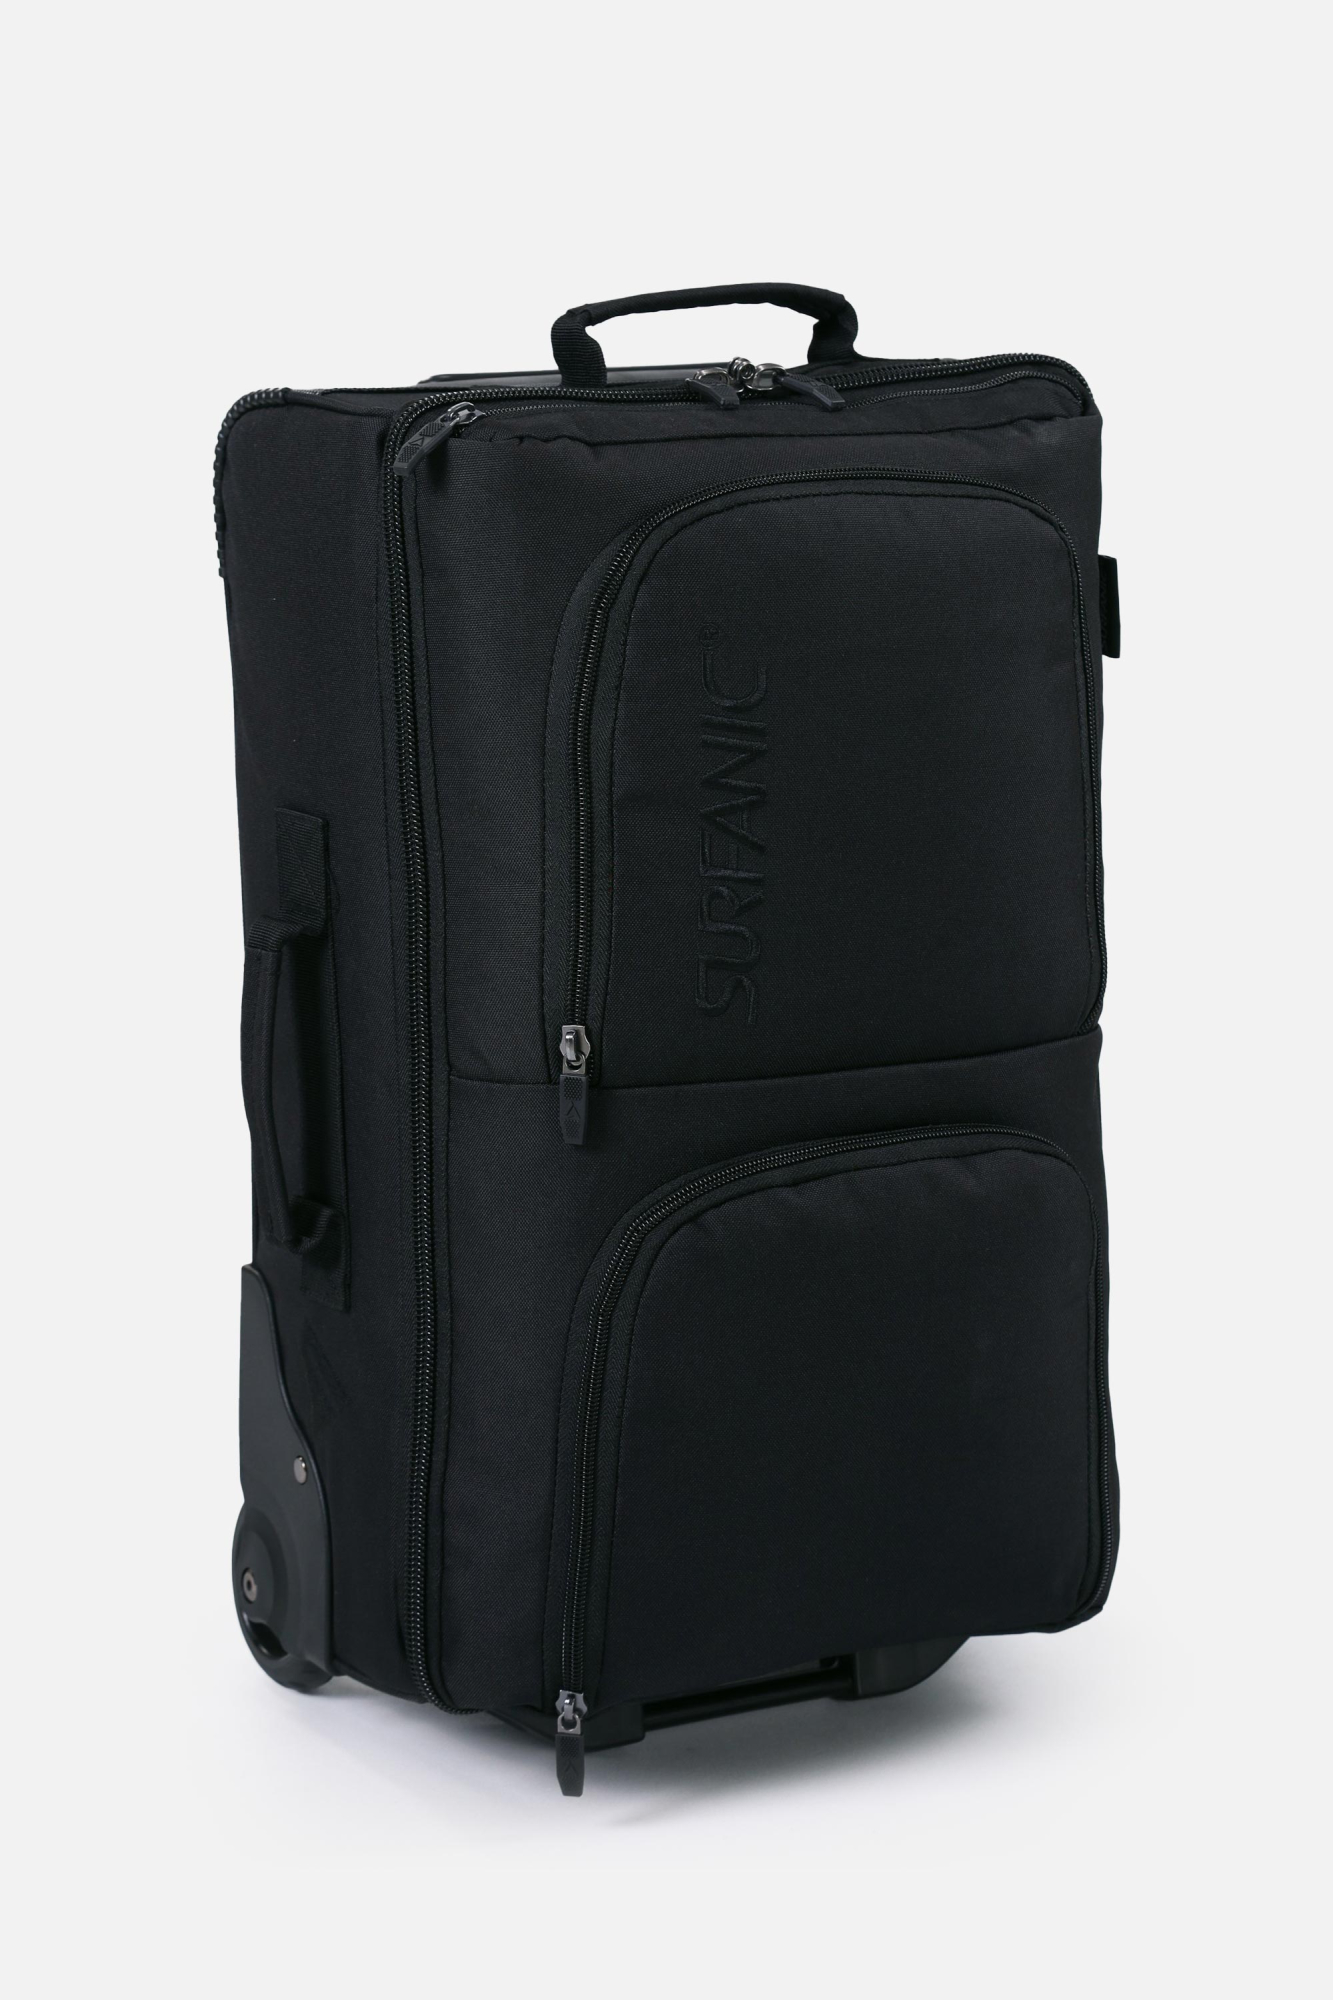 Surfanic Unisex Maxim 40 Roller Bag Black - Size: 40 Litre